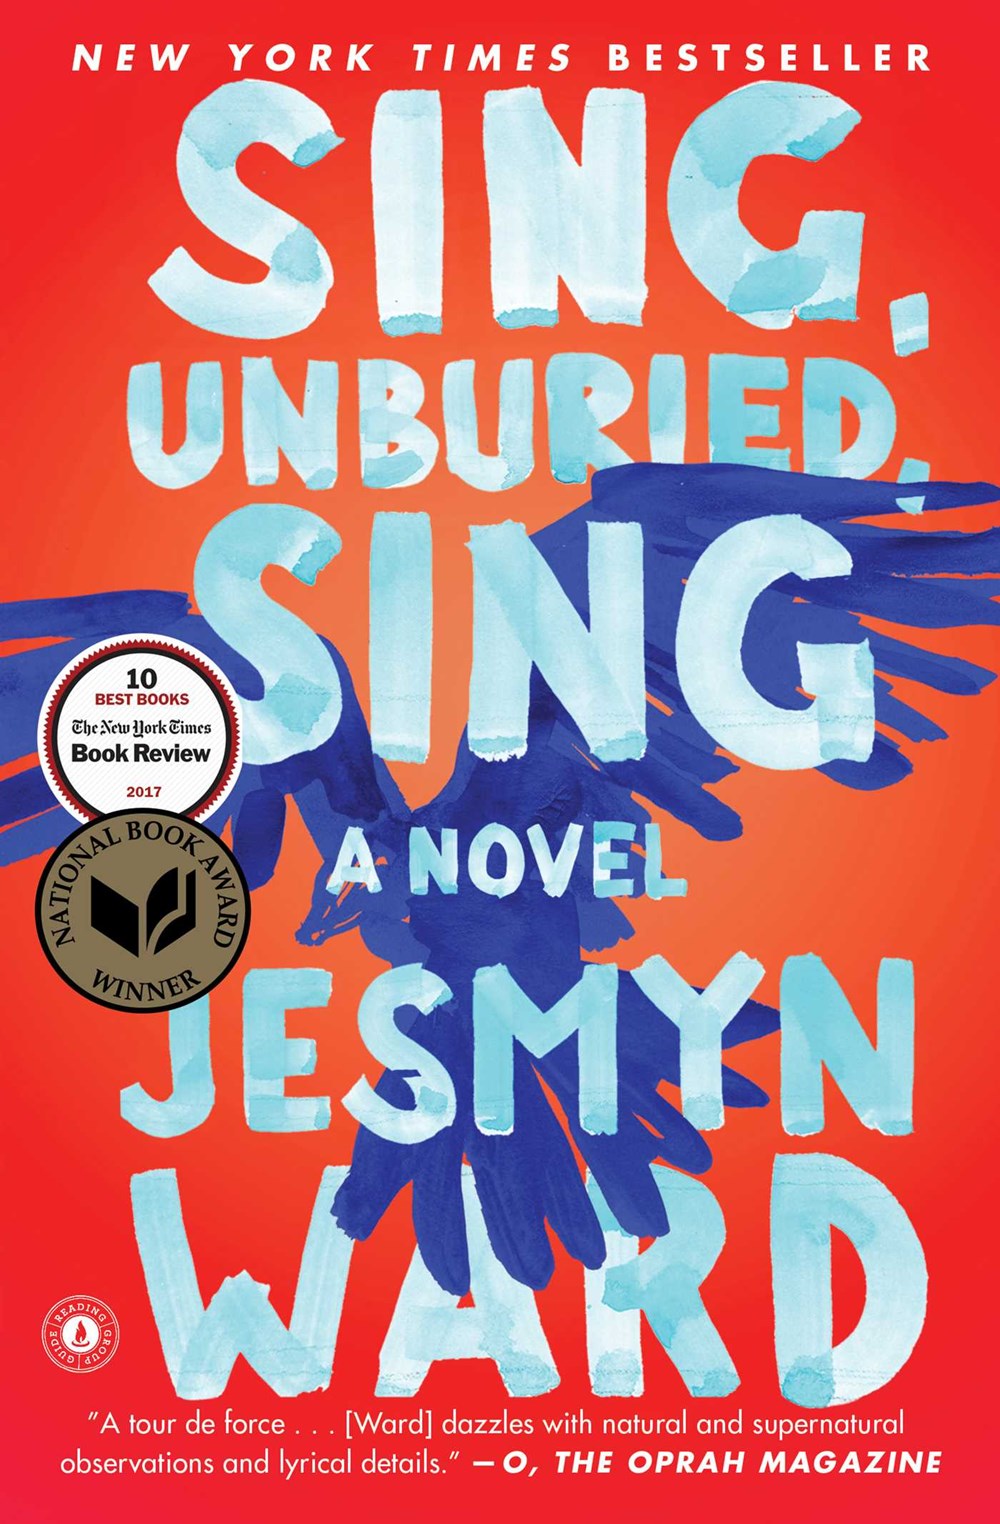 Sing, Unburied, Sing: A Novel by Jesmyn Ward